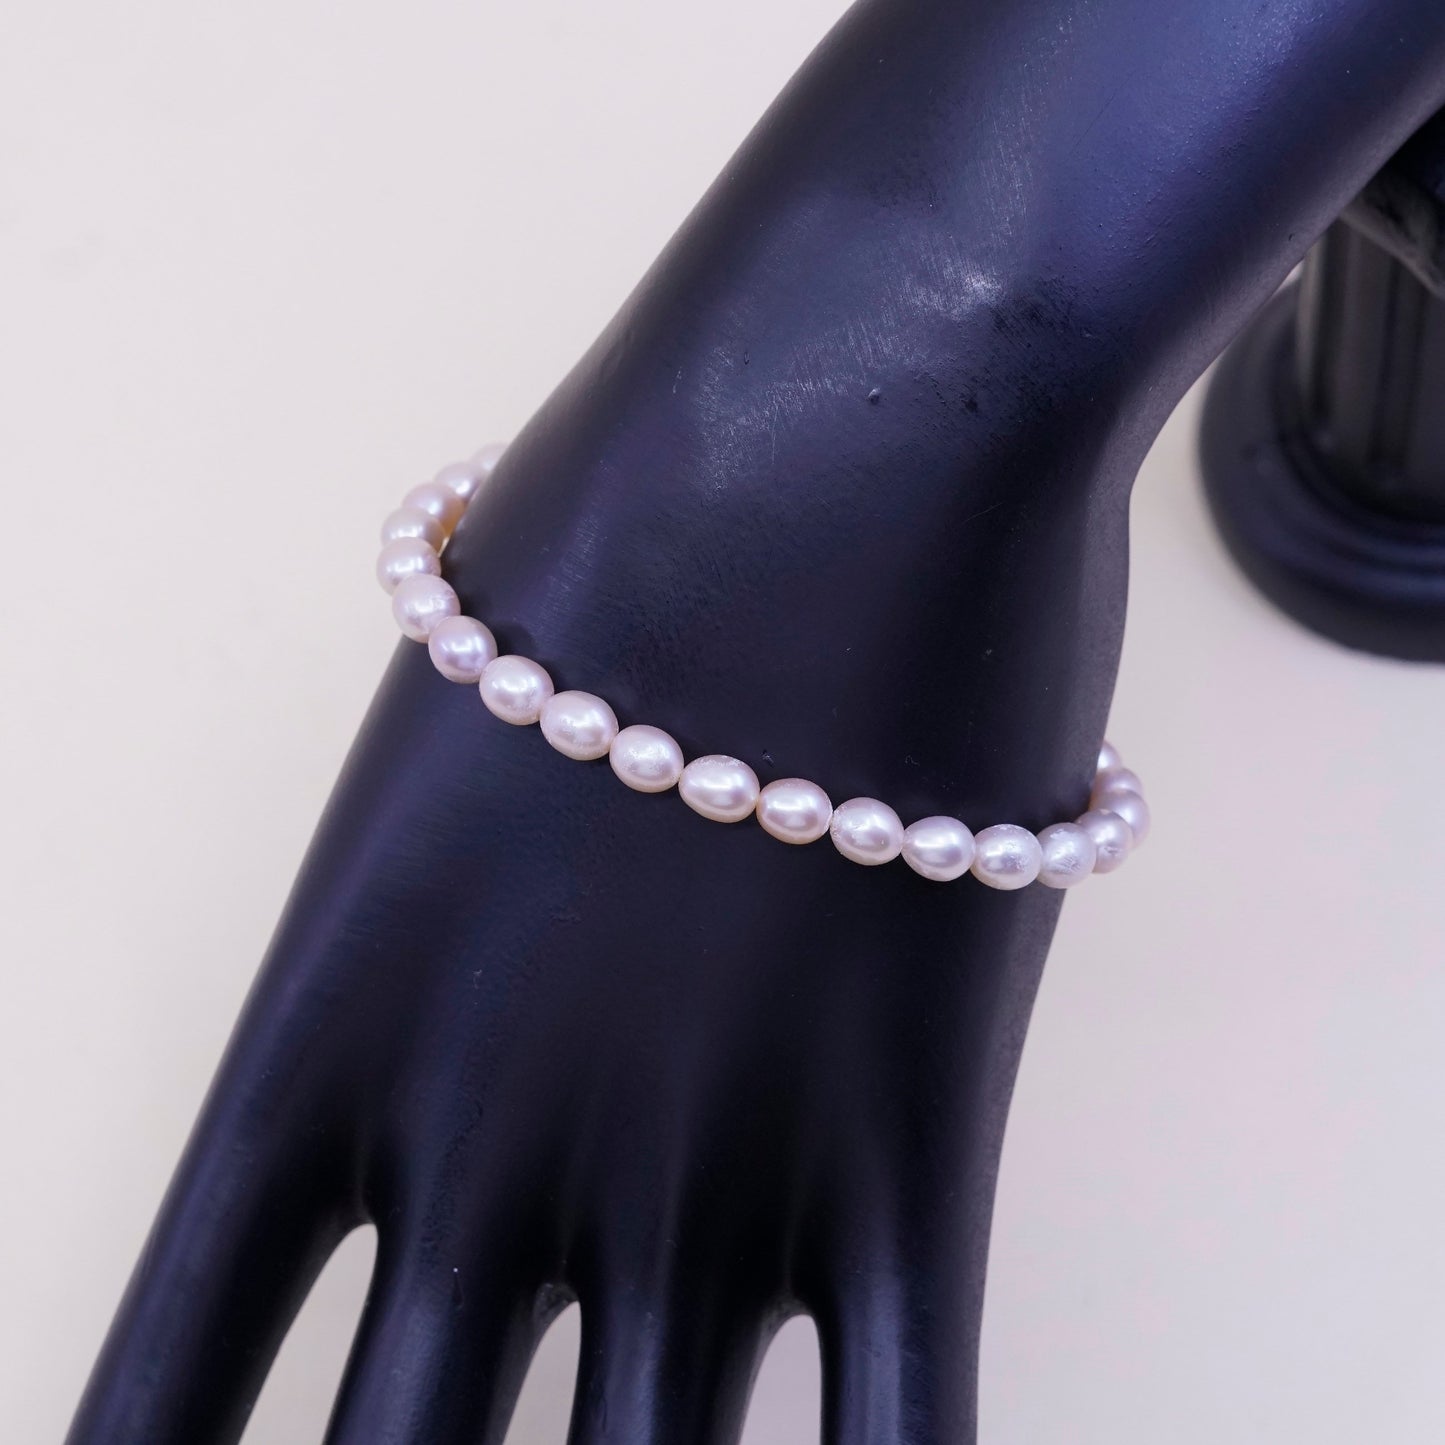 7”, Vintage handmade pink pearl bracelet with elastic band